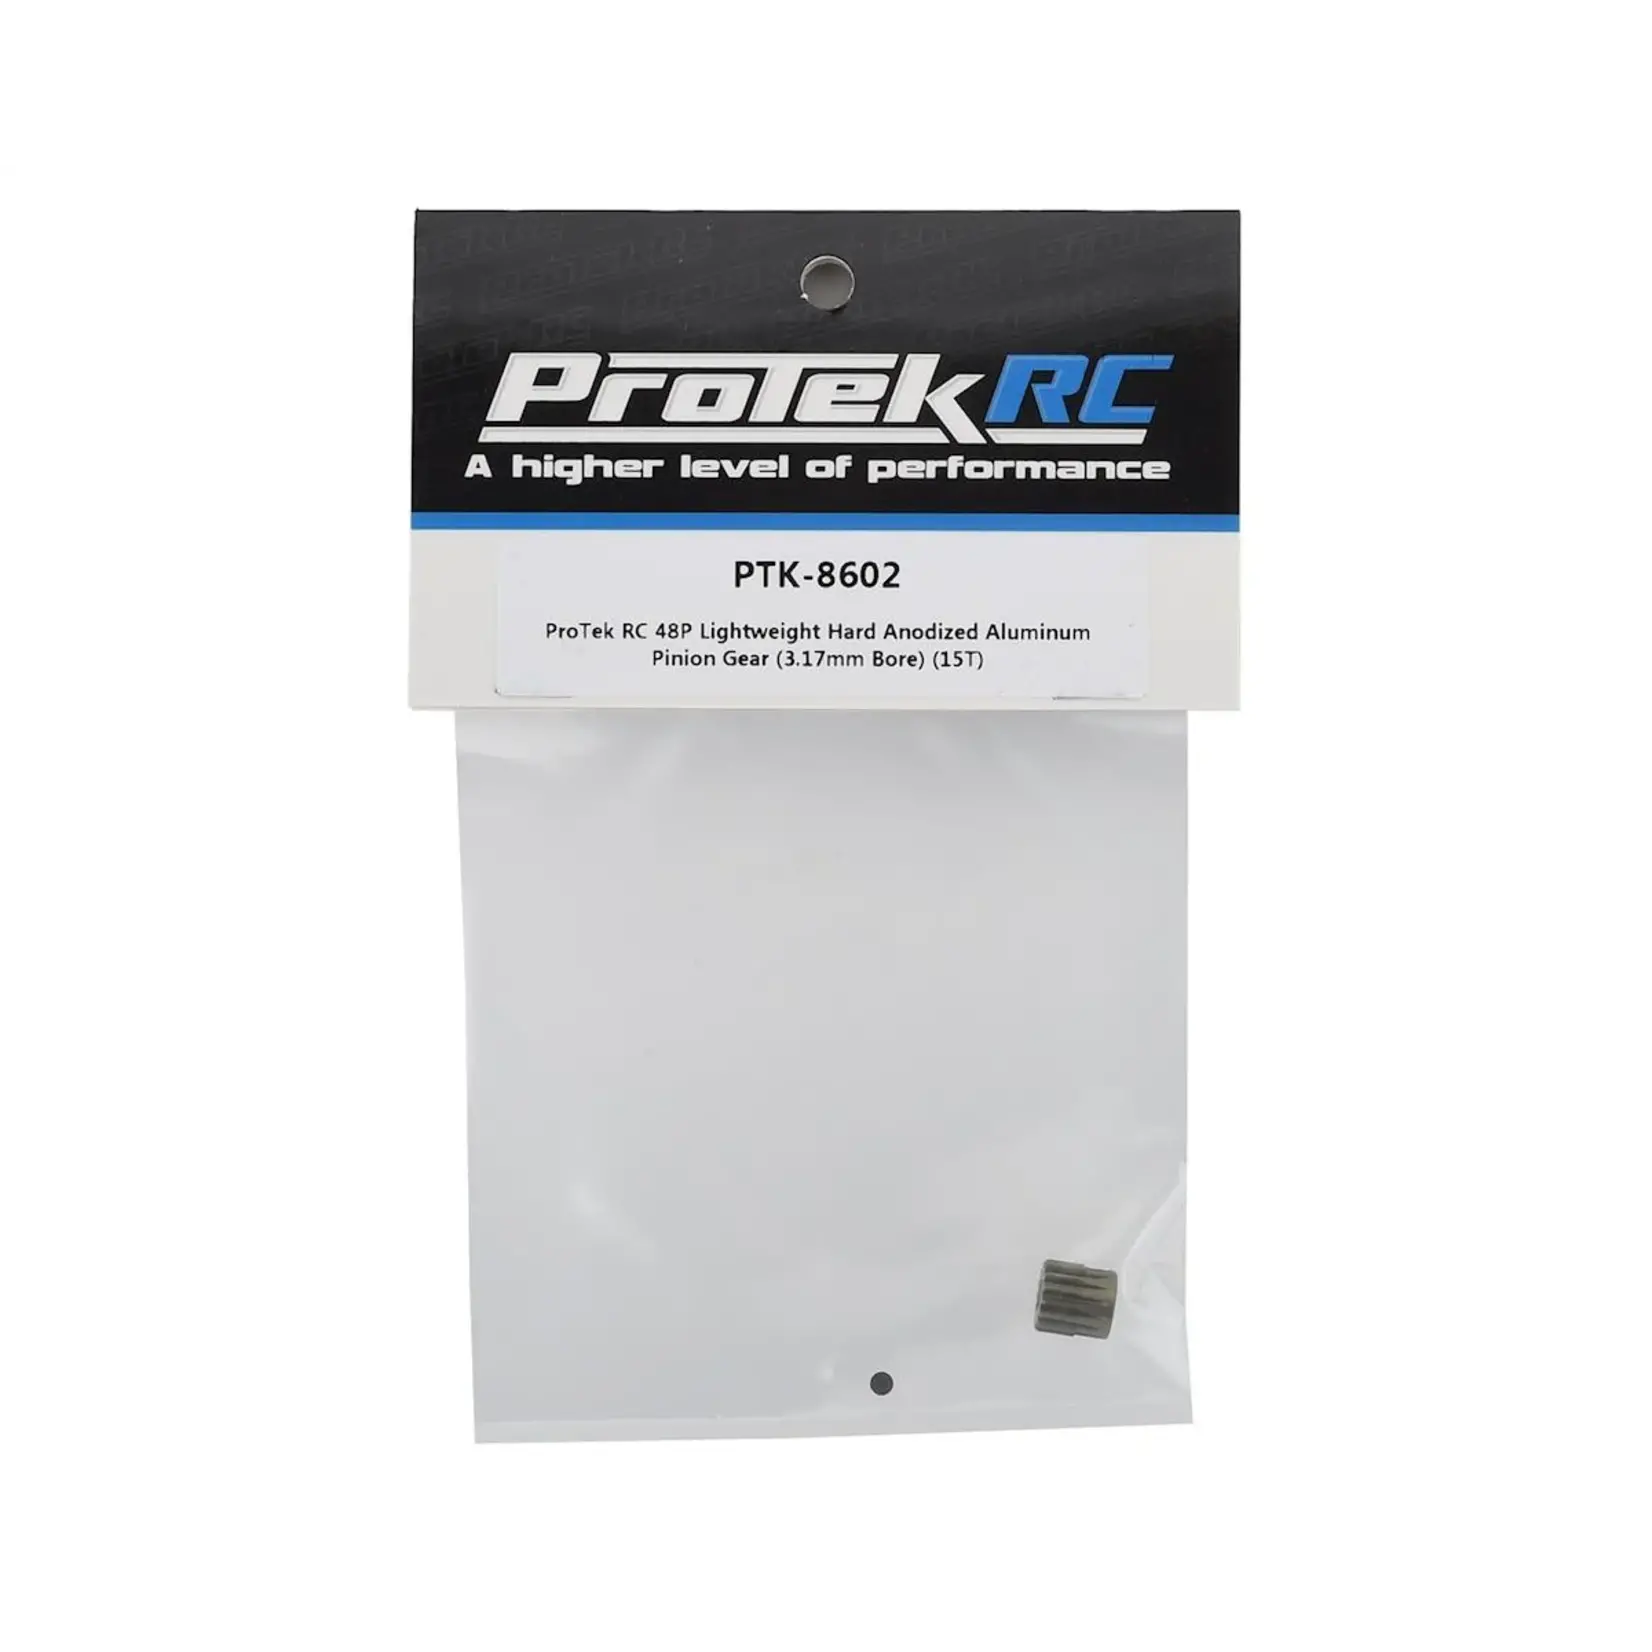 ProTek RC ProTek RC 48P Lightweight Hard Anodized Aluminum Pinion Gear (3.17mm Bore) (15T) #PTK-8602